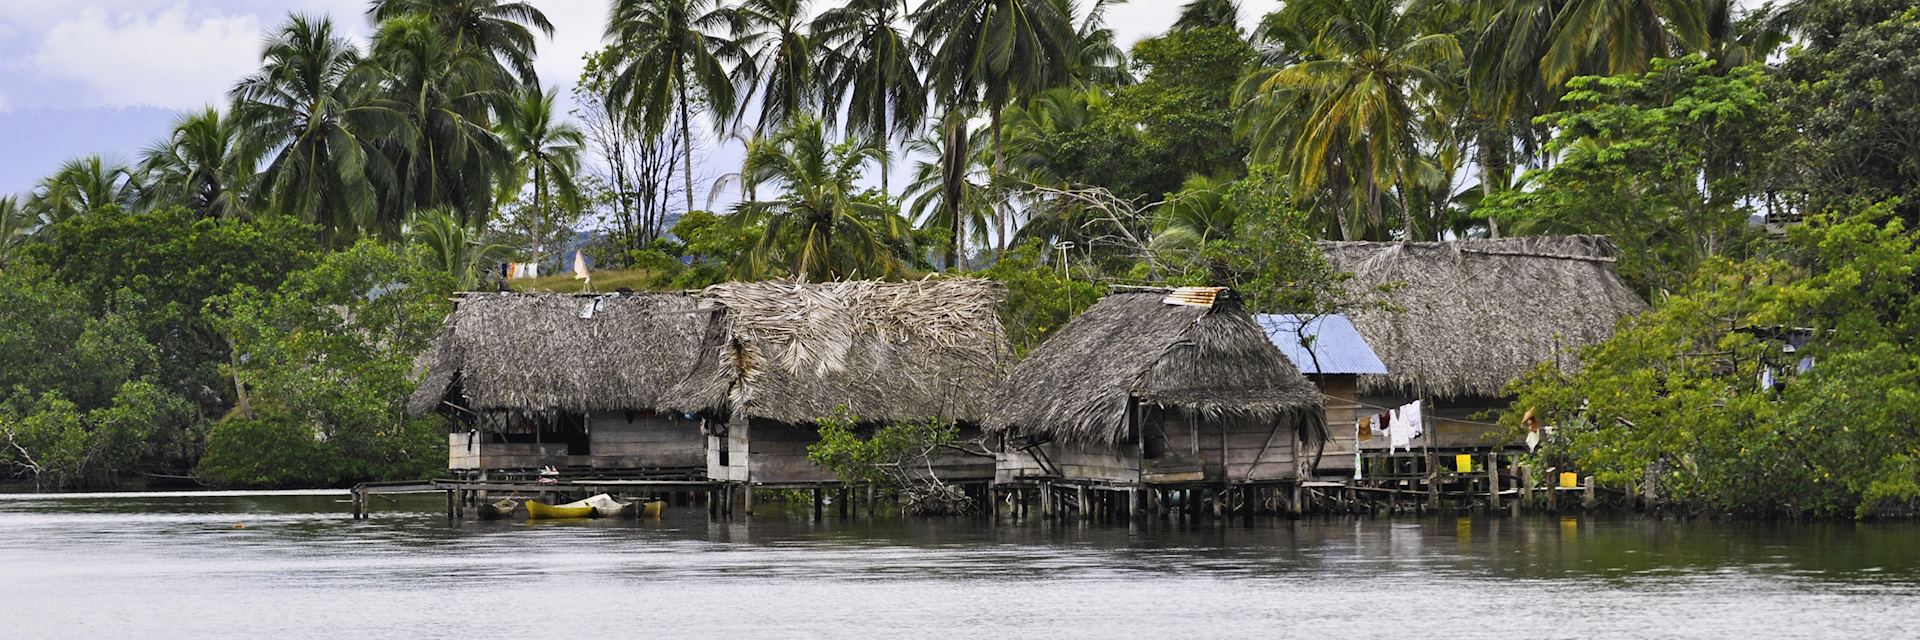 Indigenous village near Bocas Del Toro